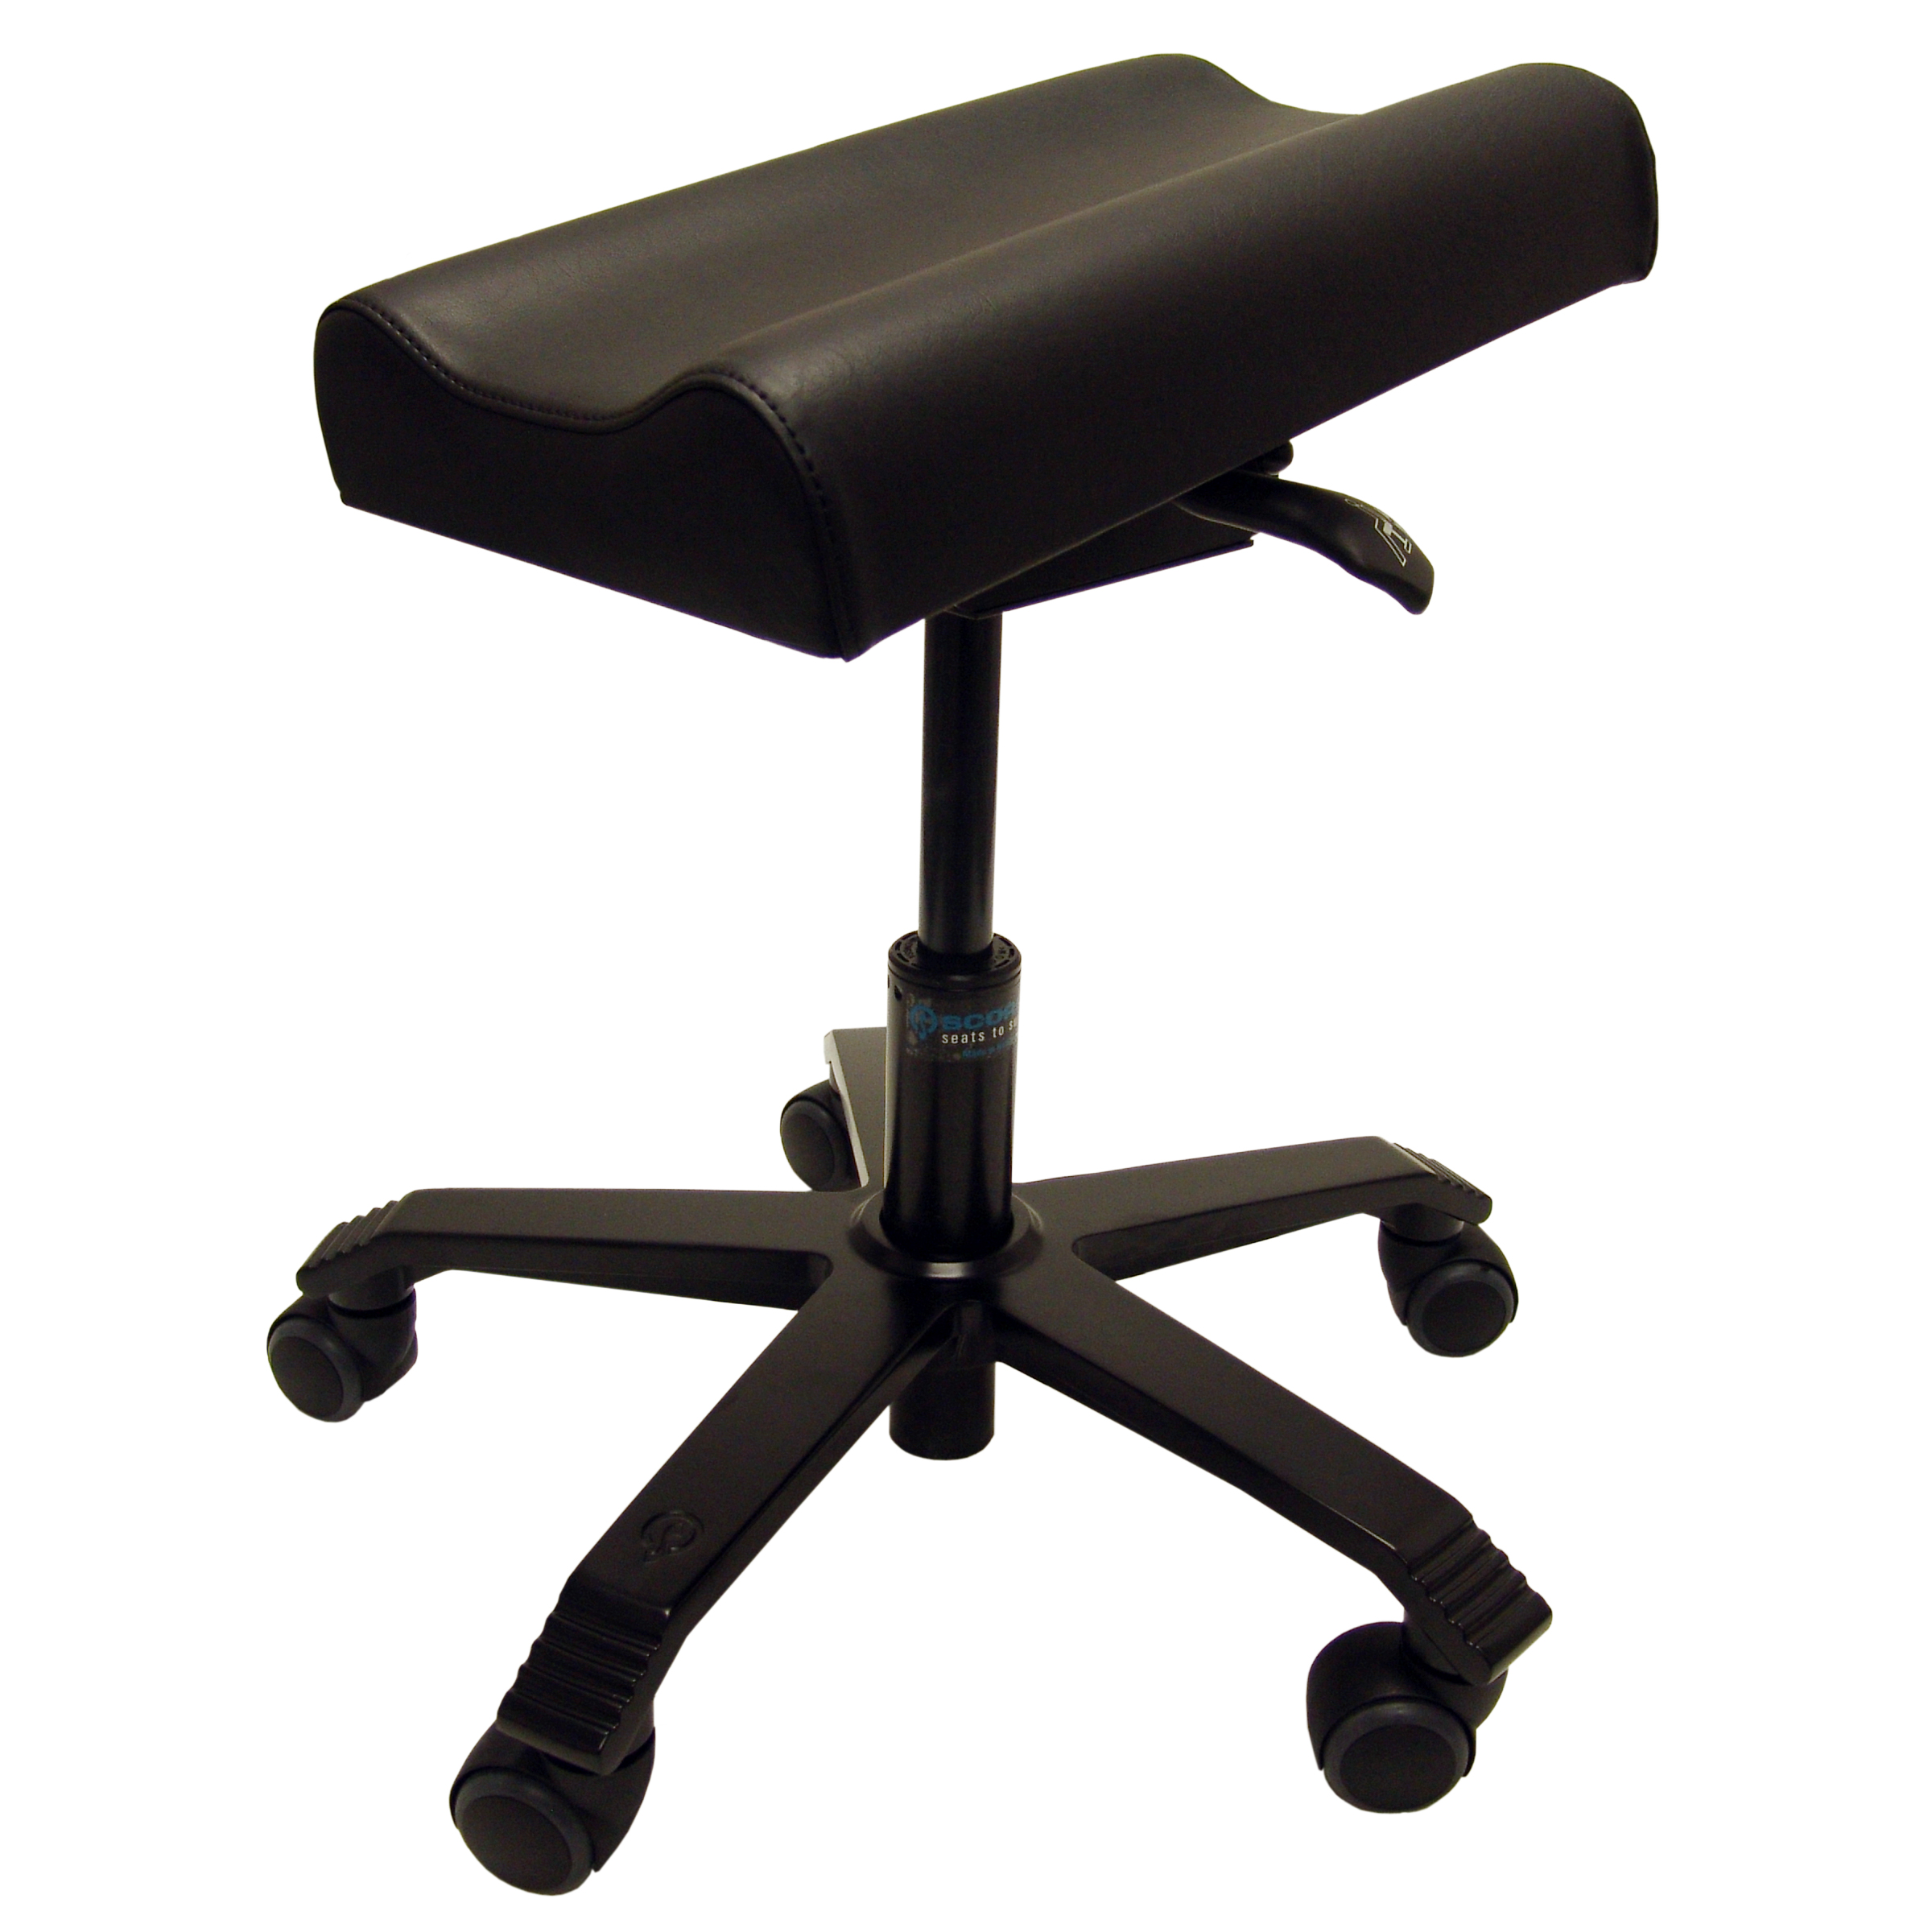 Cozy Ergo Adjustable Foot Rest Ergonomic Under Desk Footrest with 2 Adjustable Height - Foam Foot Rest Under Desk for Leg Support and Knee Pain Relief